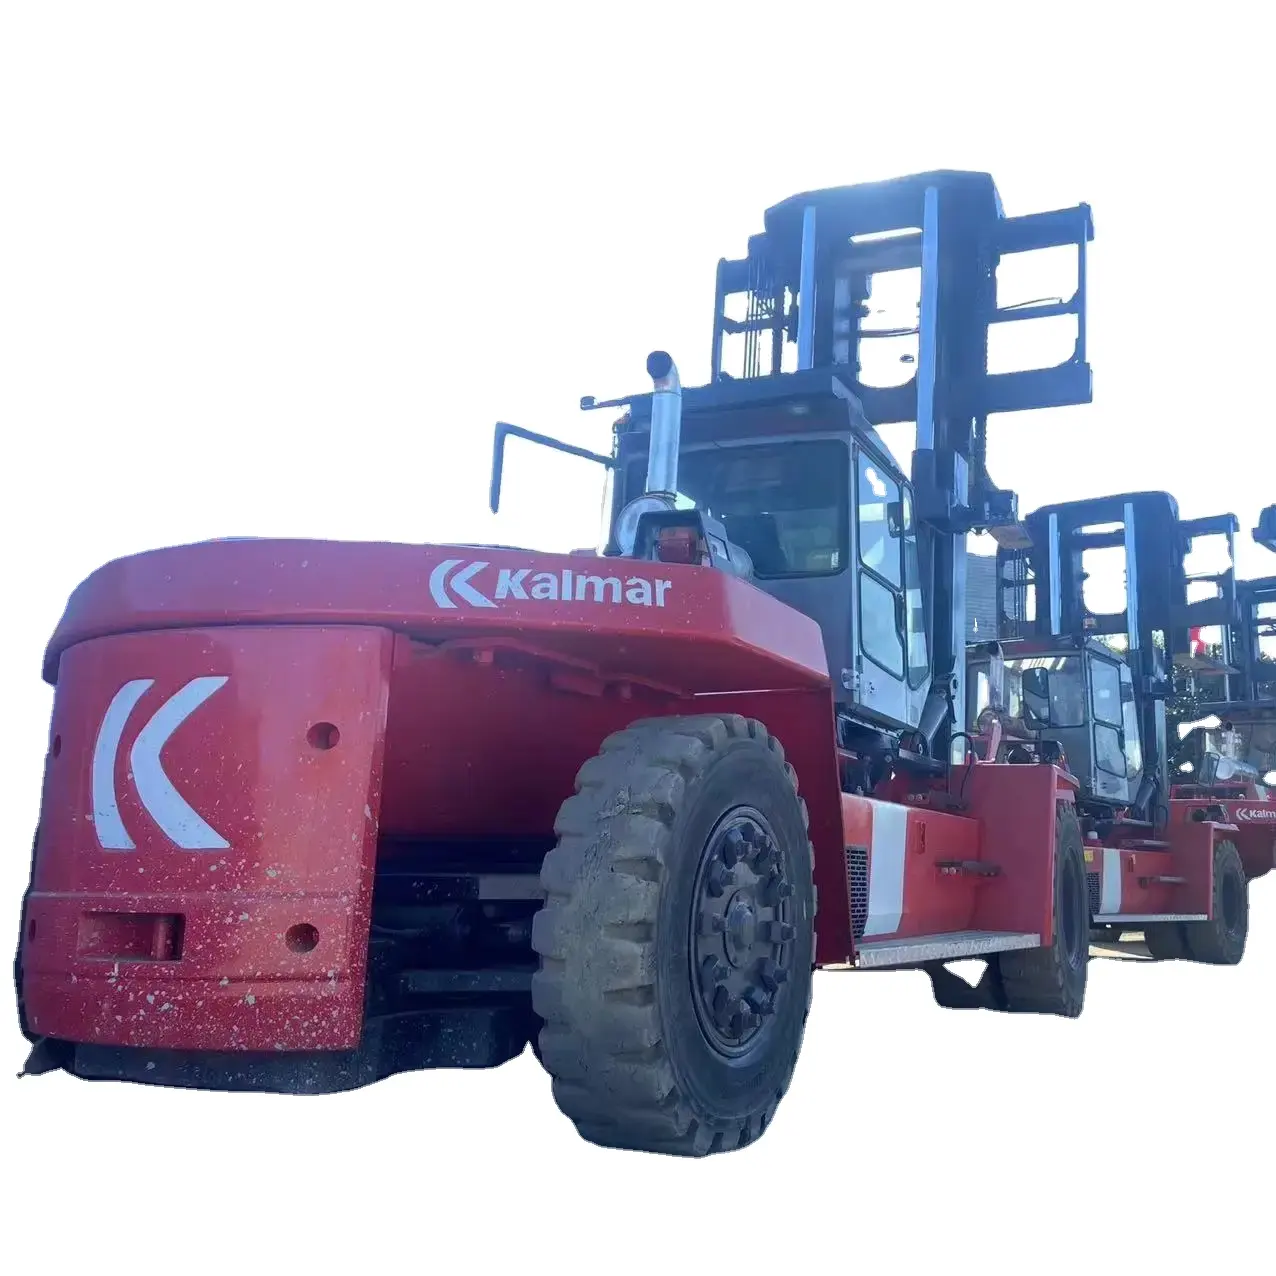 Manipulador de contenedores Kalmar de 40 toneladas, apilador de alcance Kalmar usado a la venta